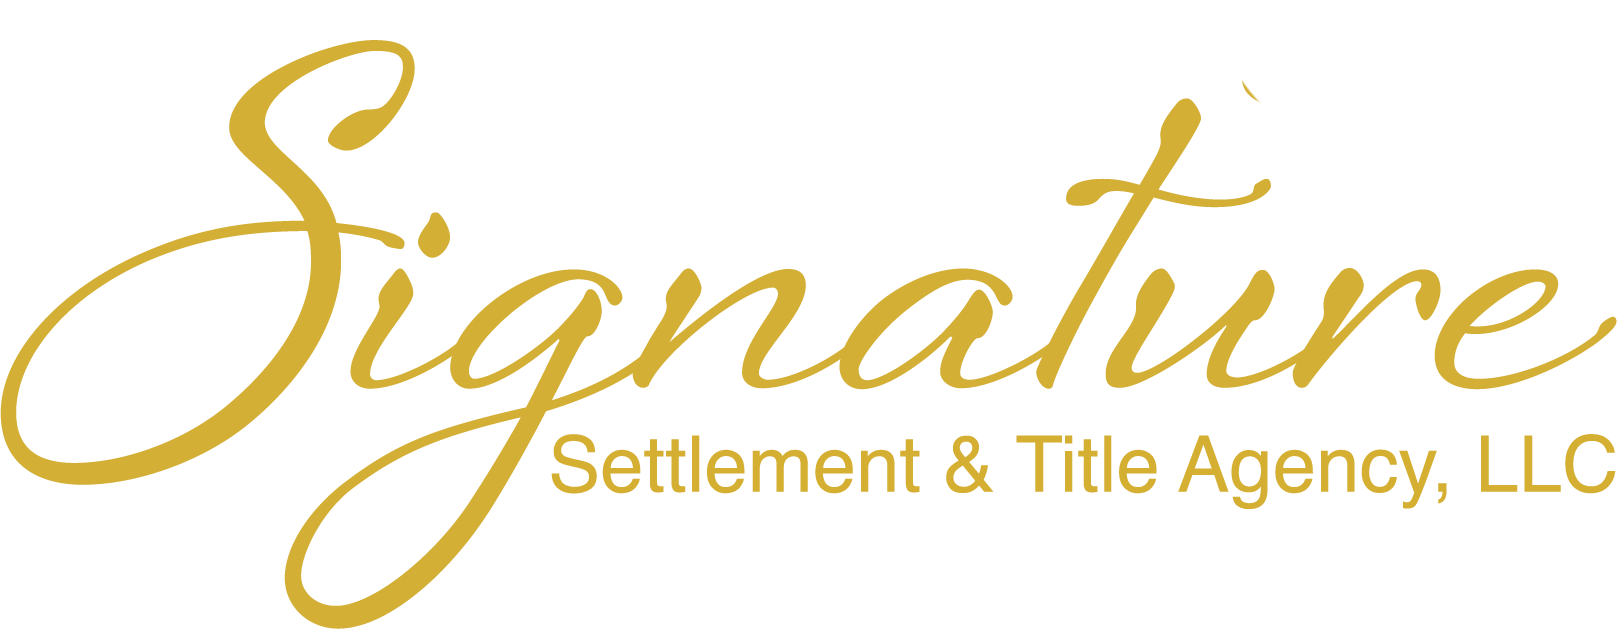 CX-57239 -Signature Settlement & Title Agency, LLC_final (1)